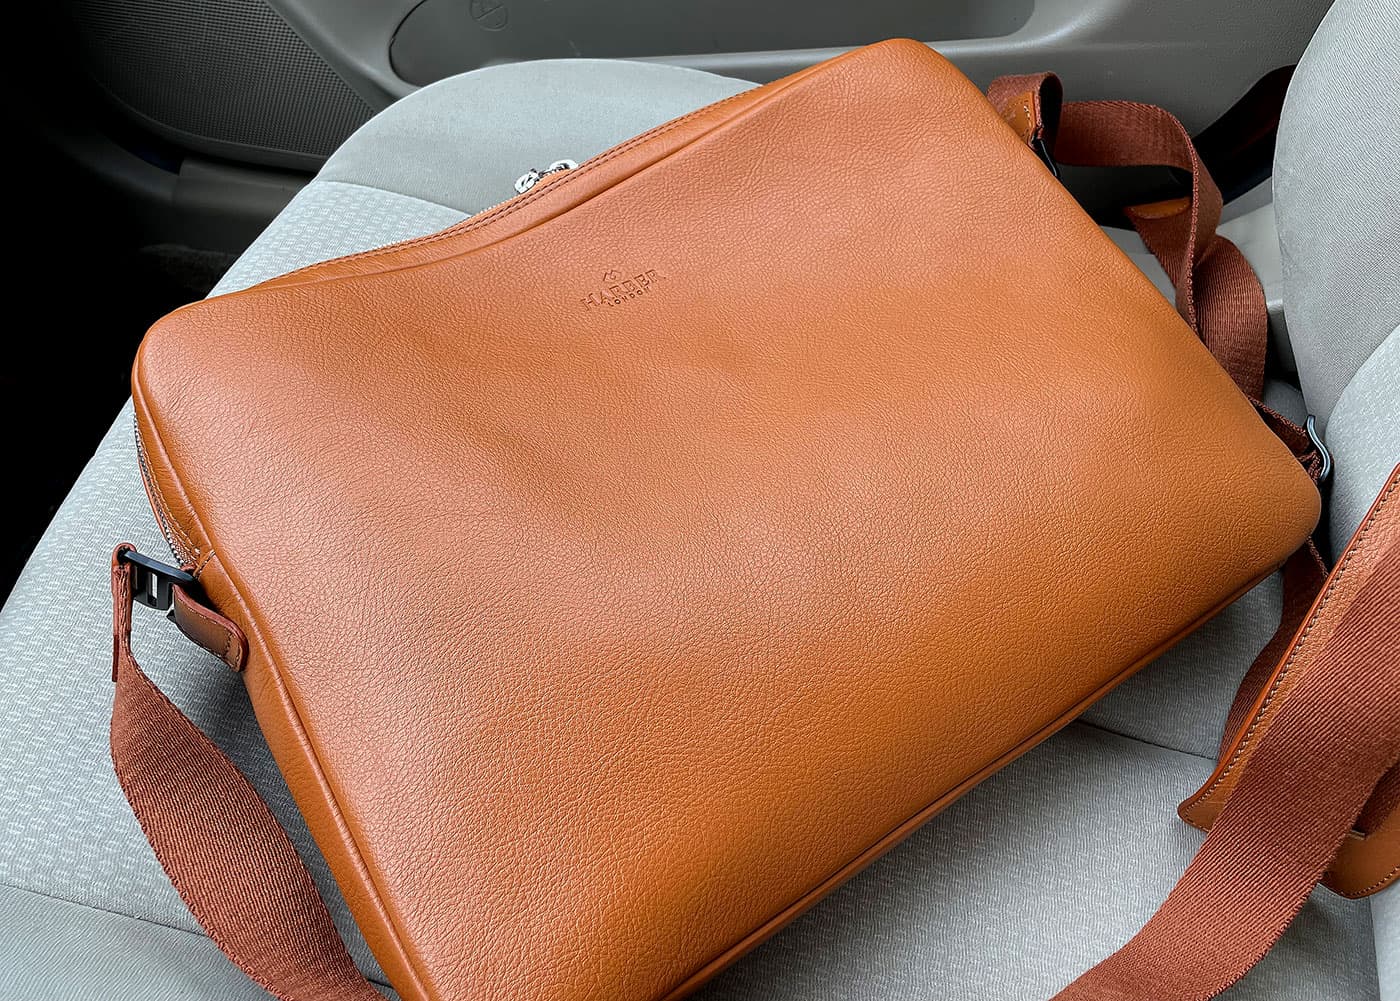 Harber London Leather Messenger Bag for MacBook review - The Gadgeteer